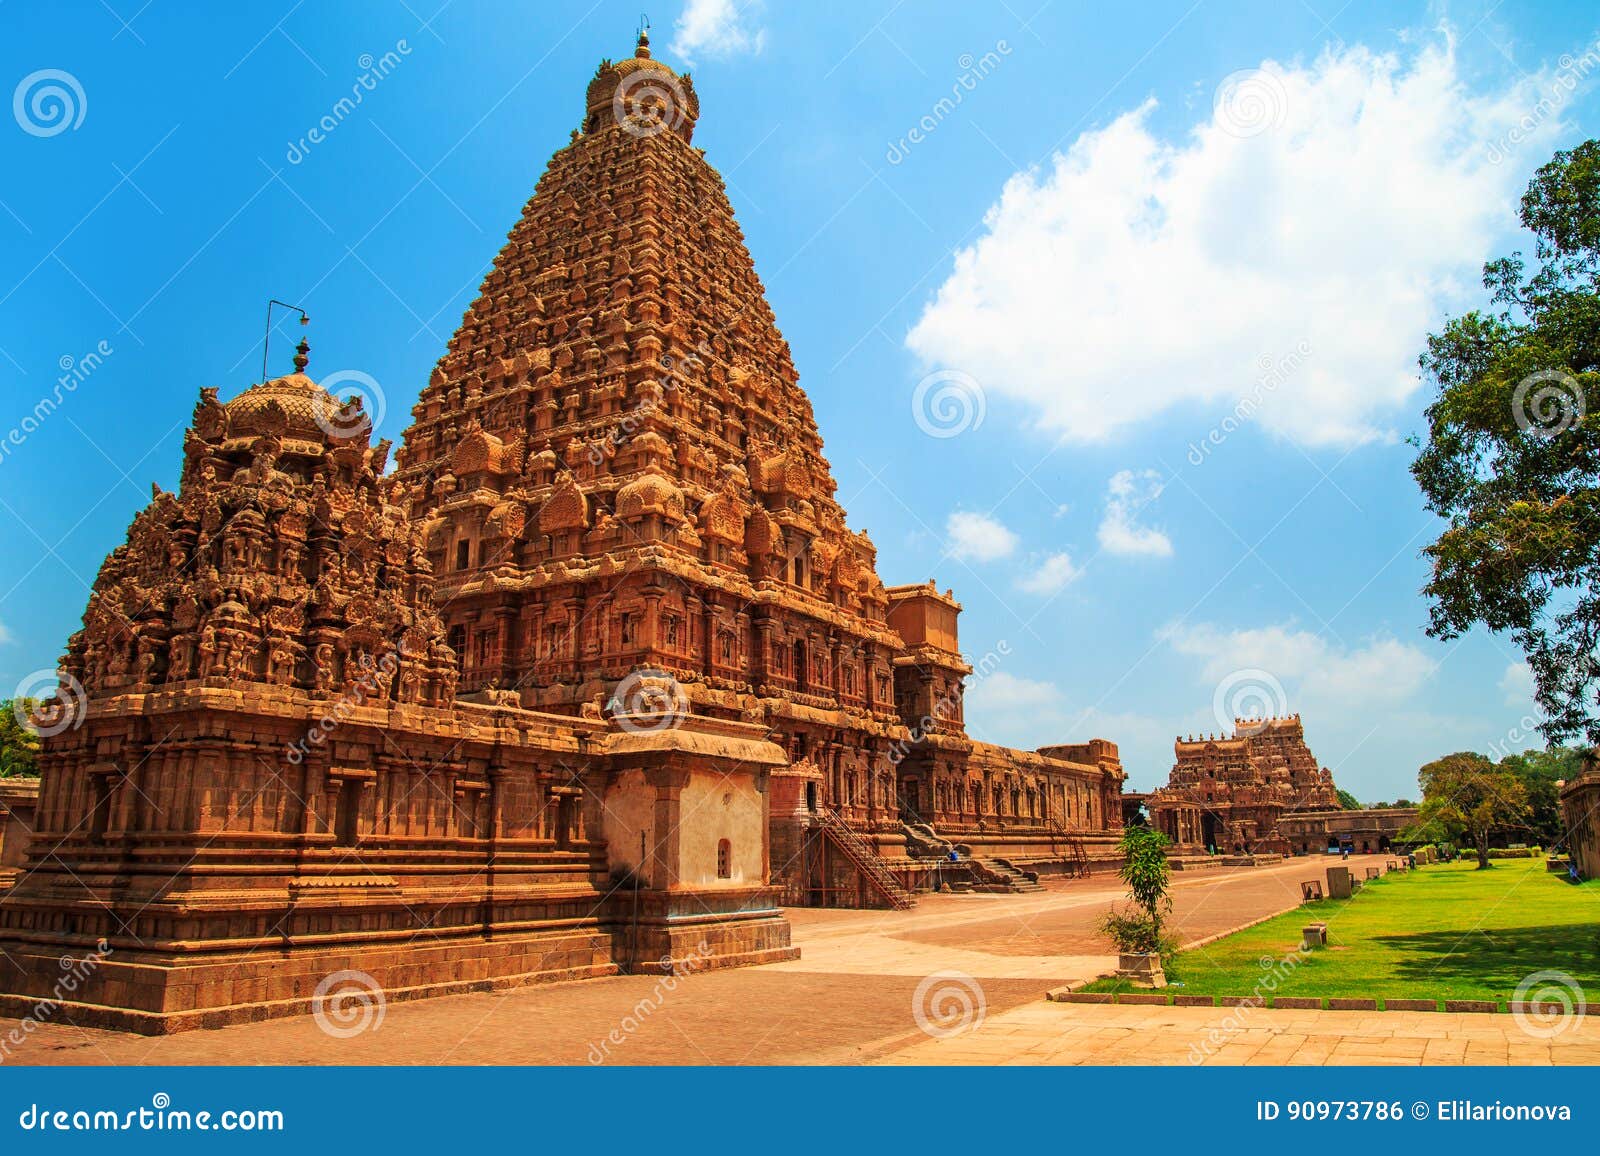 brihadeeswara temple in thanjavur, tamil nadu, india.